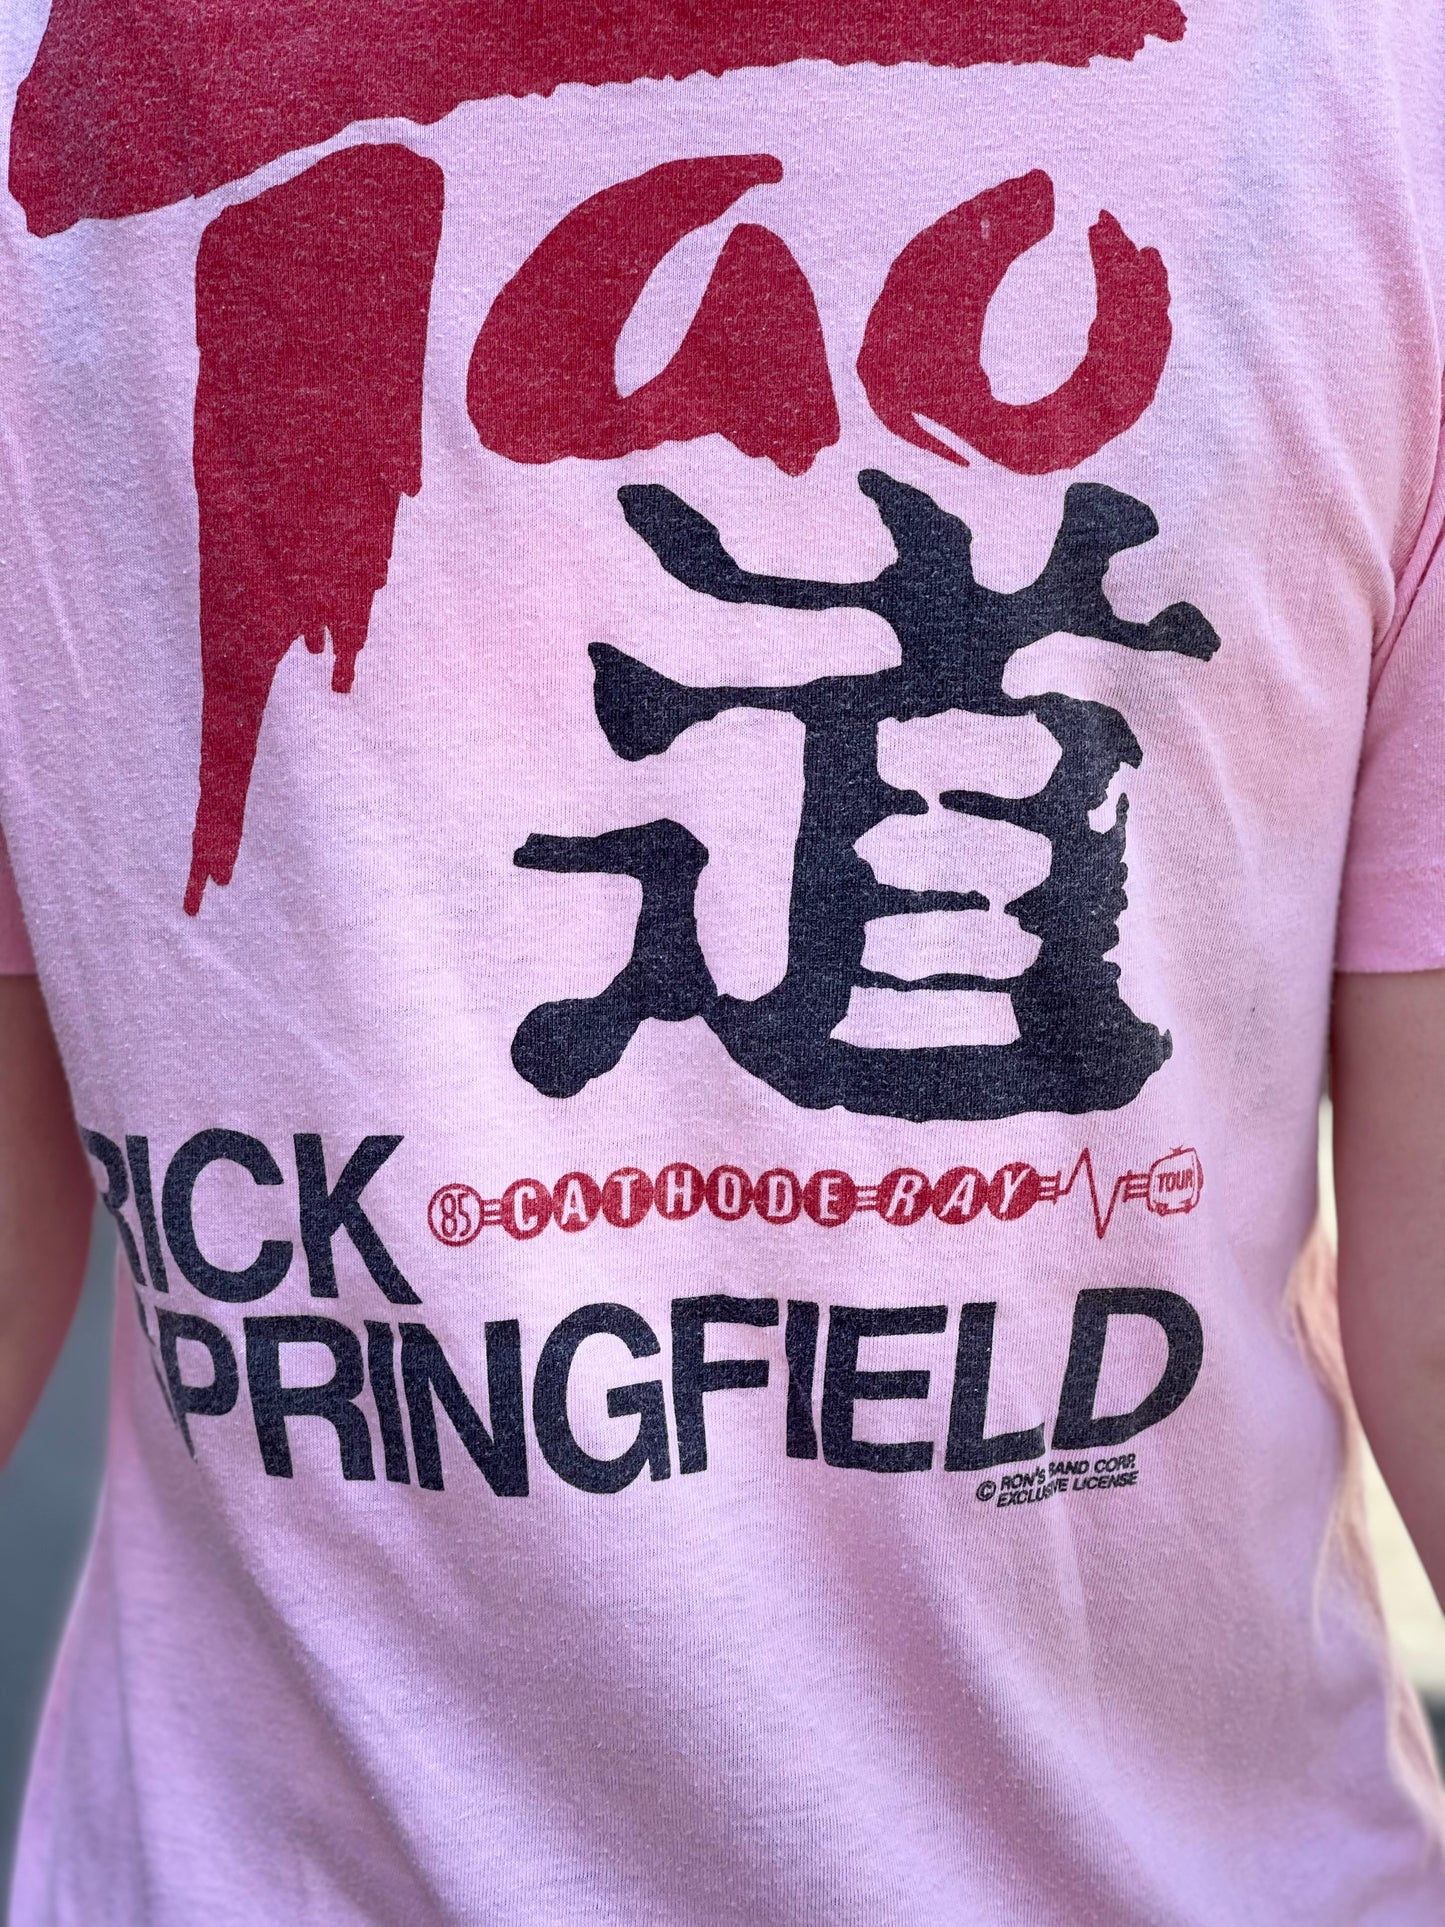 Vintage 1985 Rick Springfield Tour T-shirt - Spark Pretty